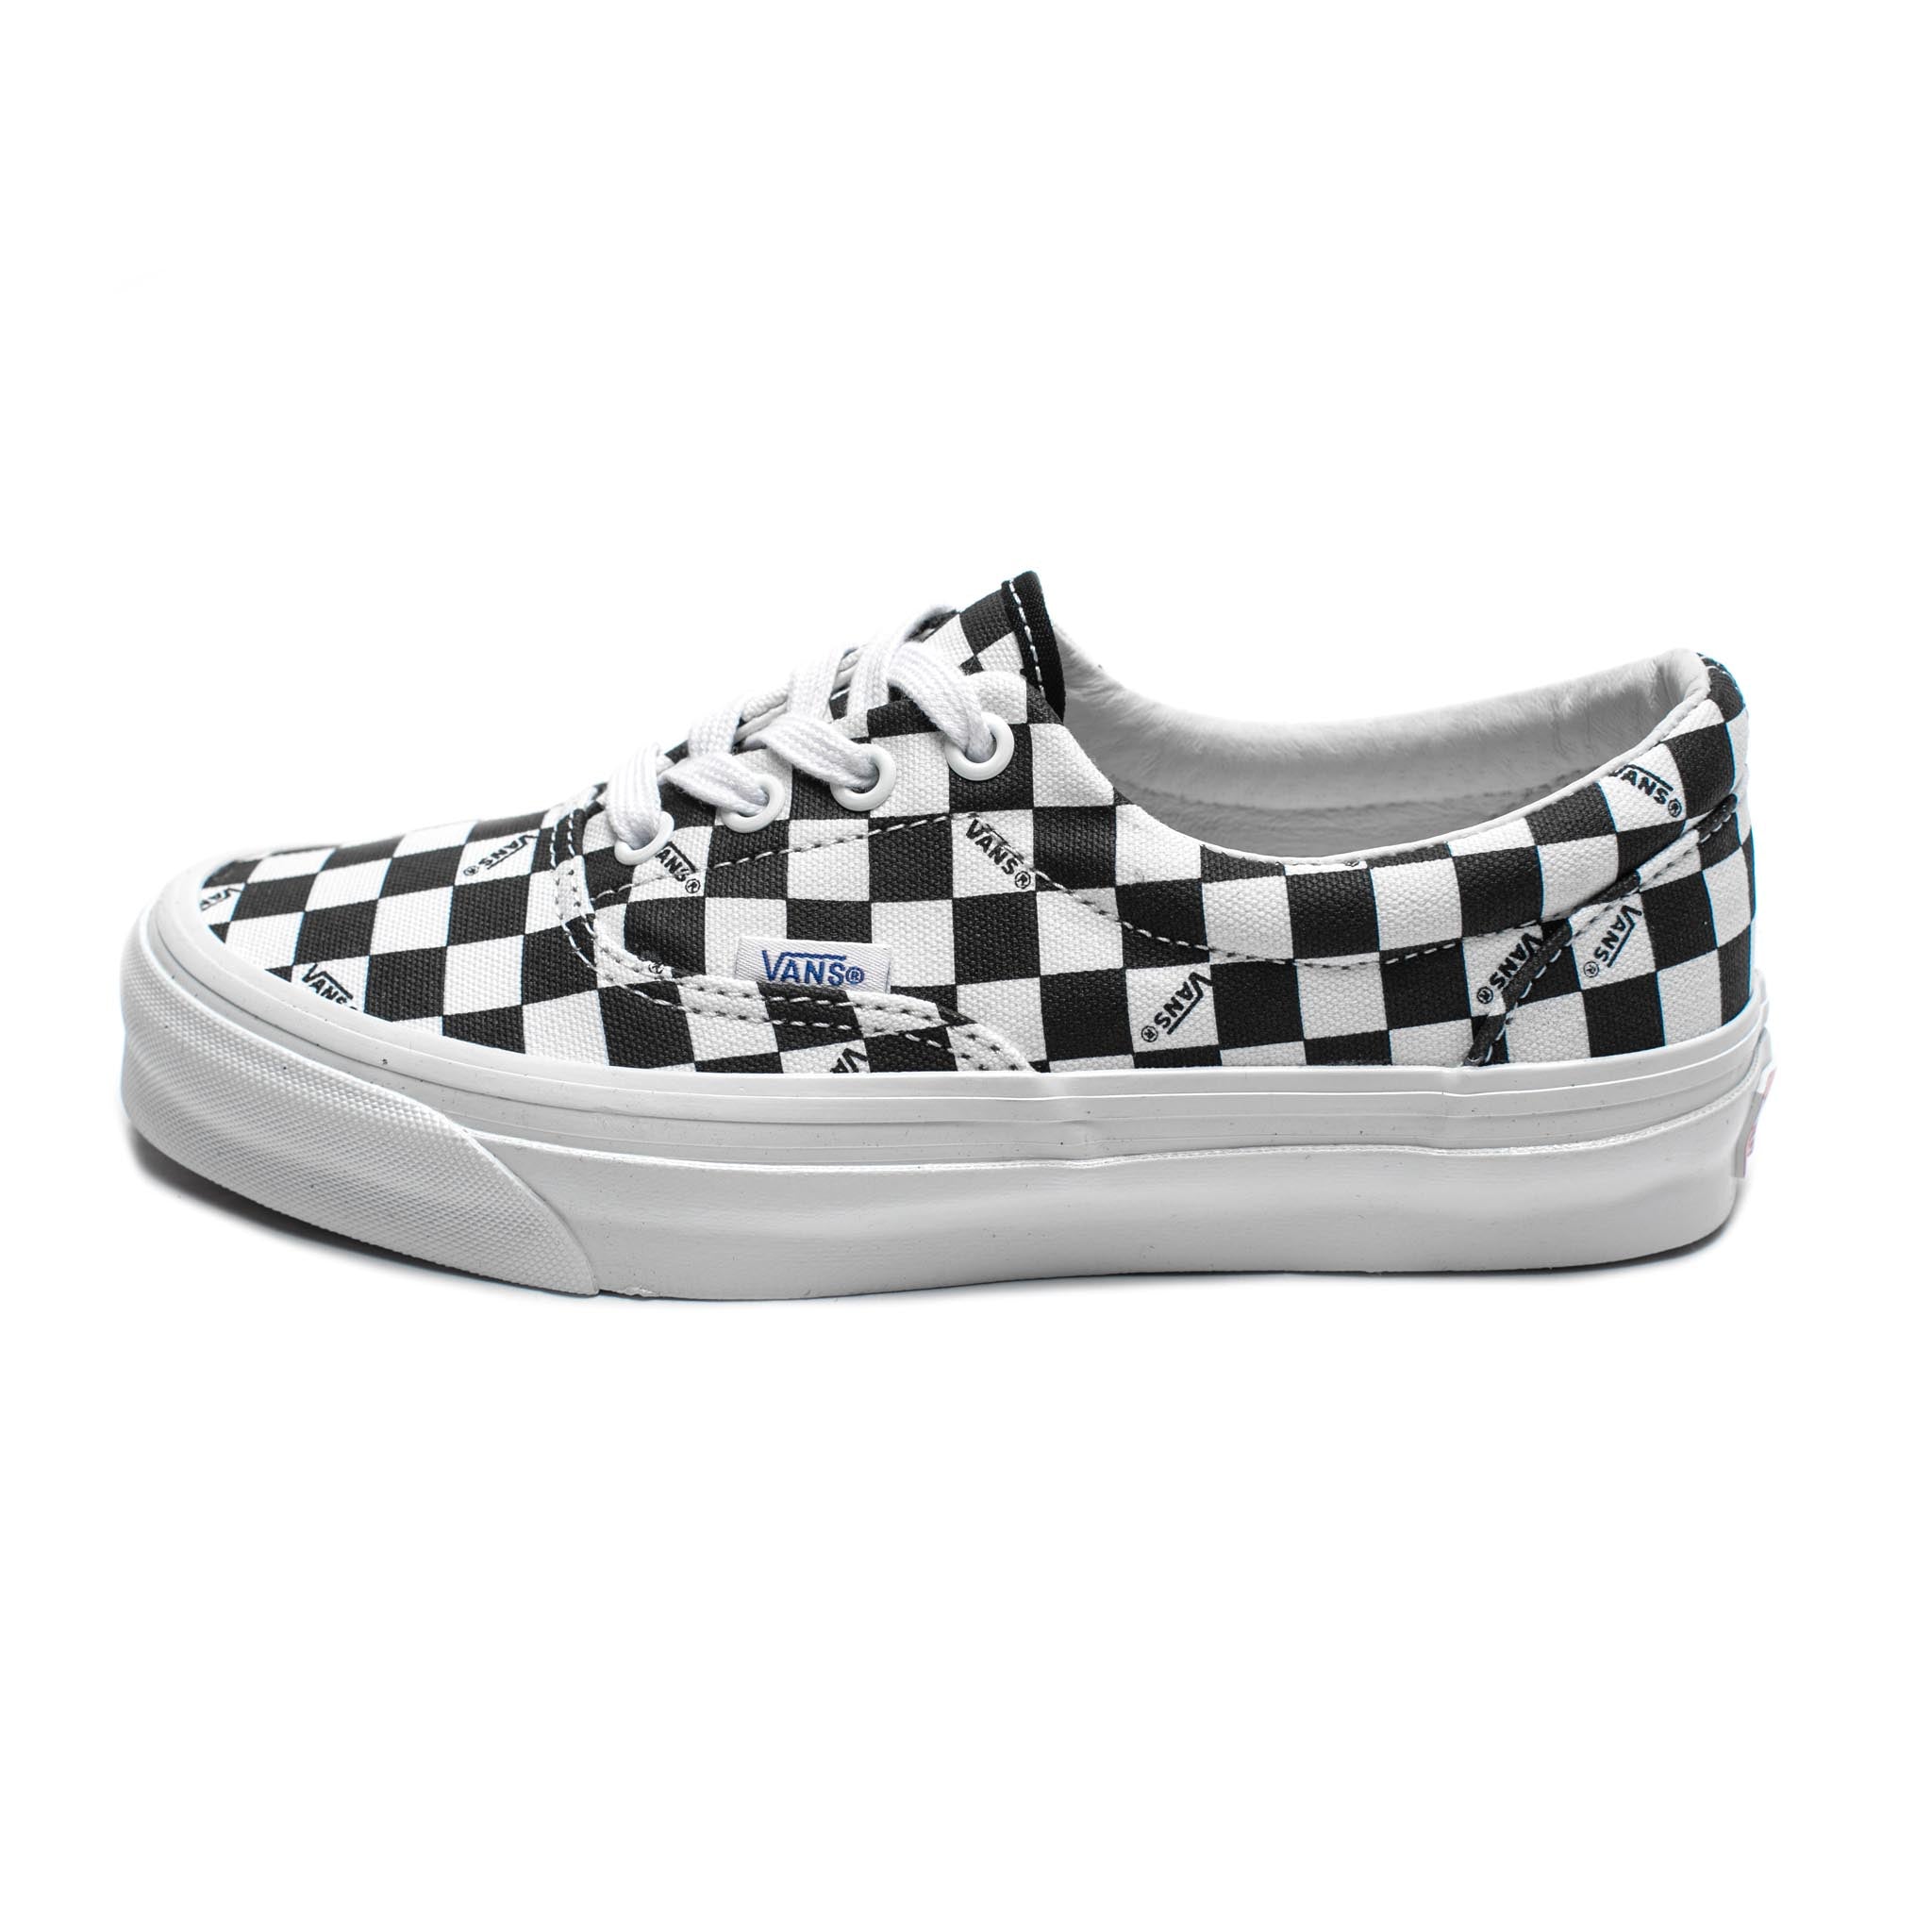 Vans Vault OG Era LX Black/White Checkerboard | SNEAKERBOX